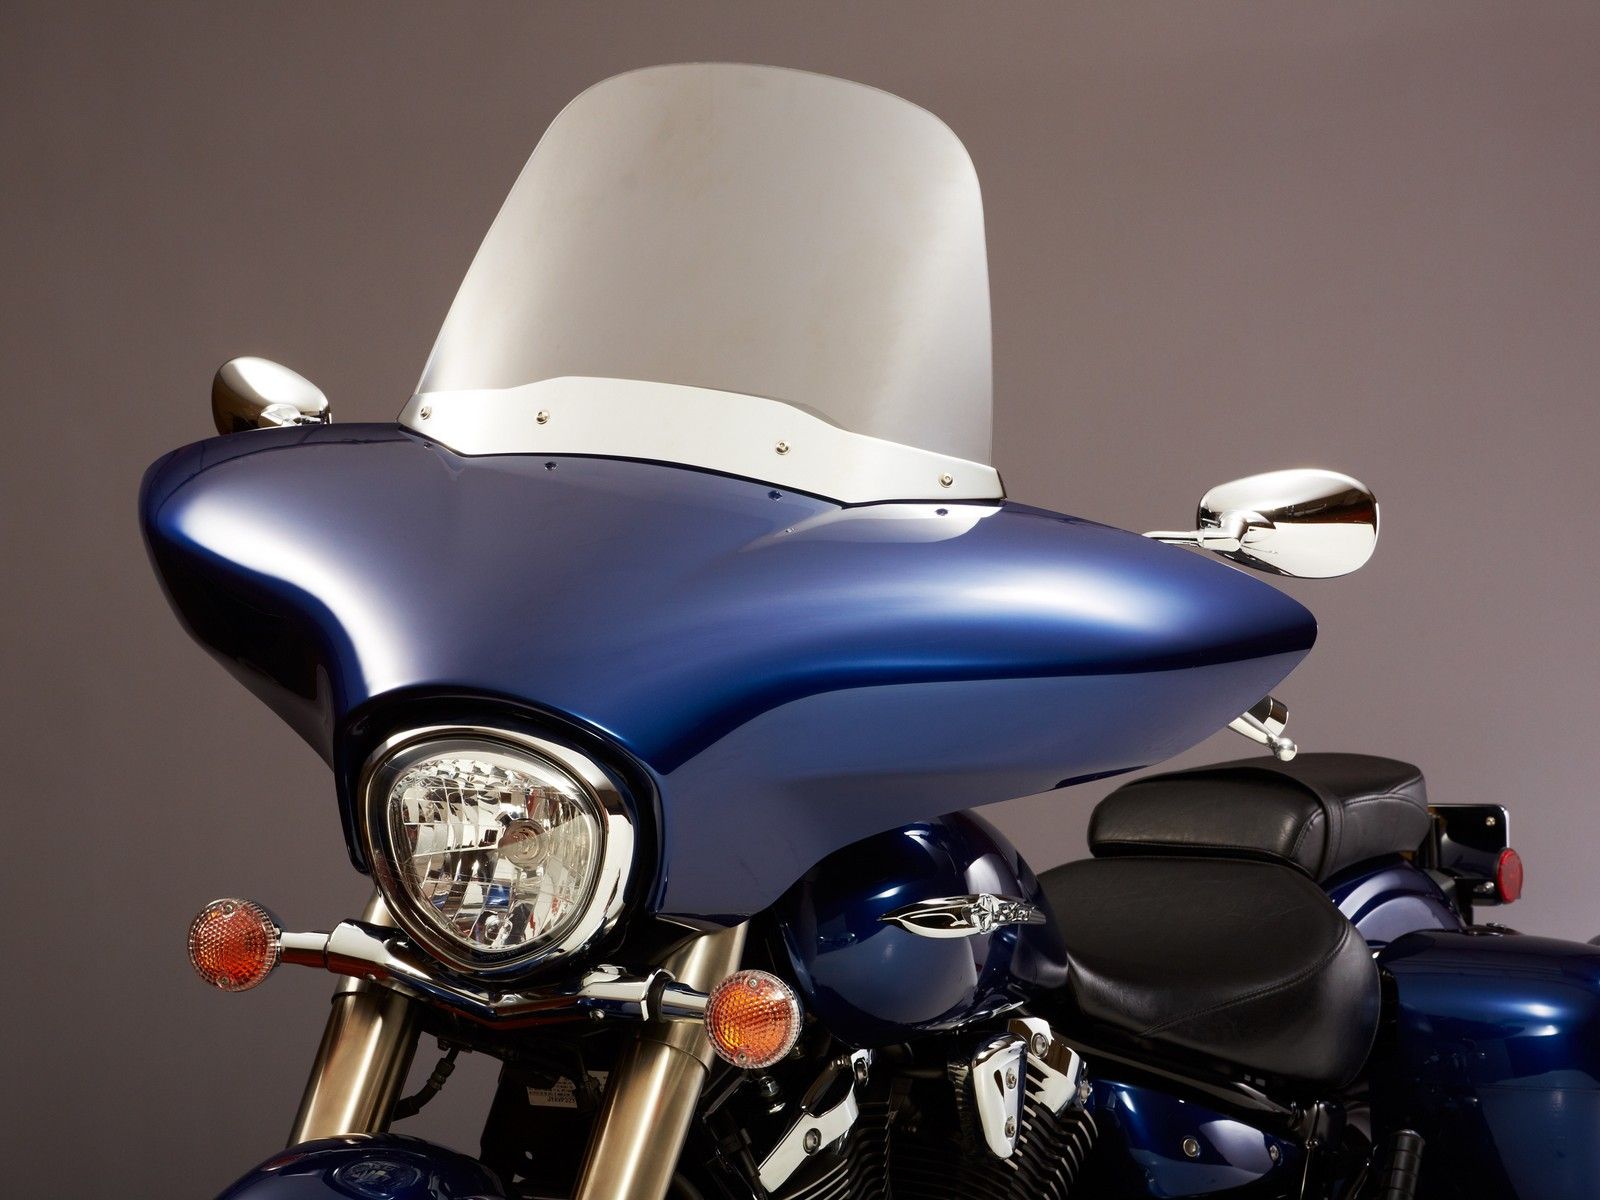 2013 Star Motorcycle V Star 1300 Deluxe